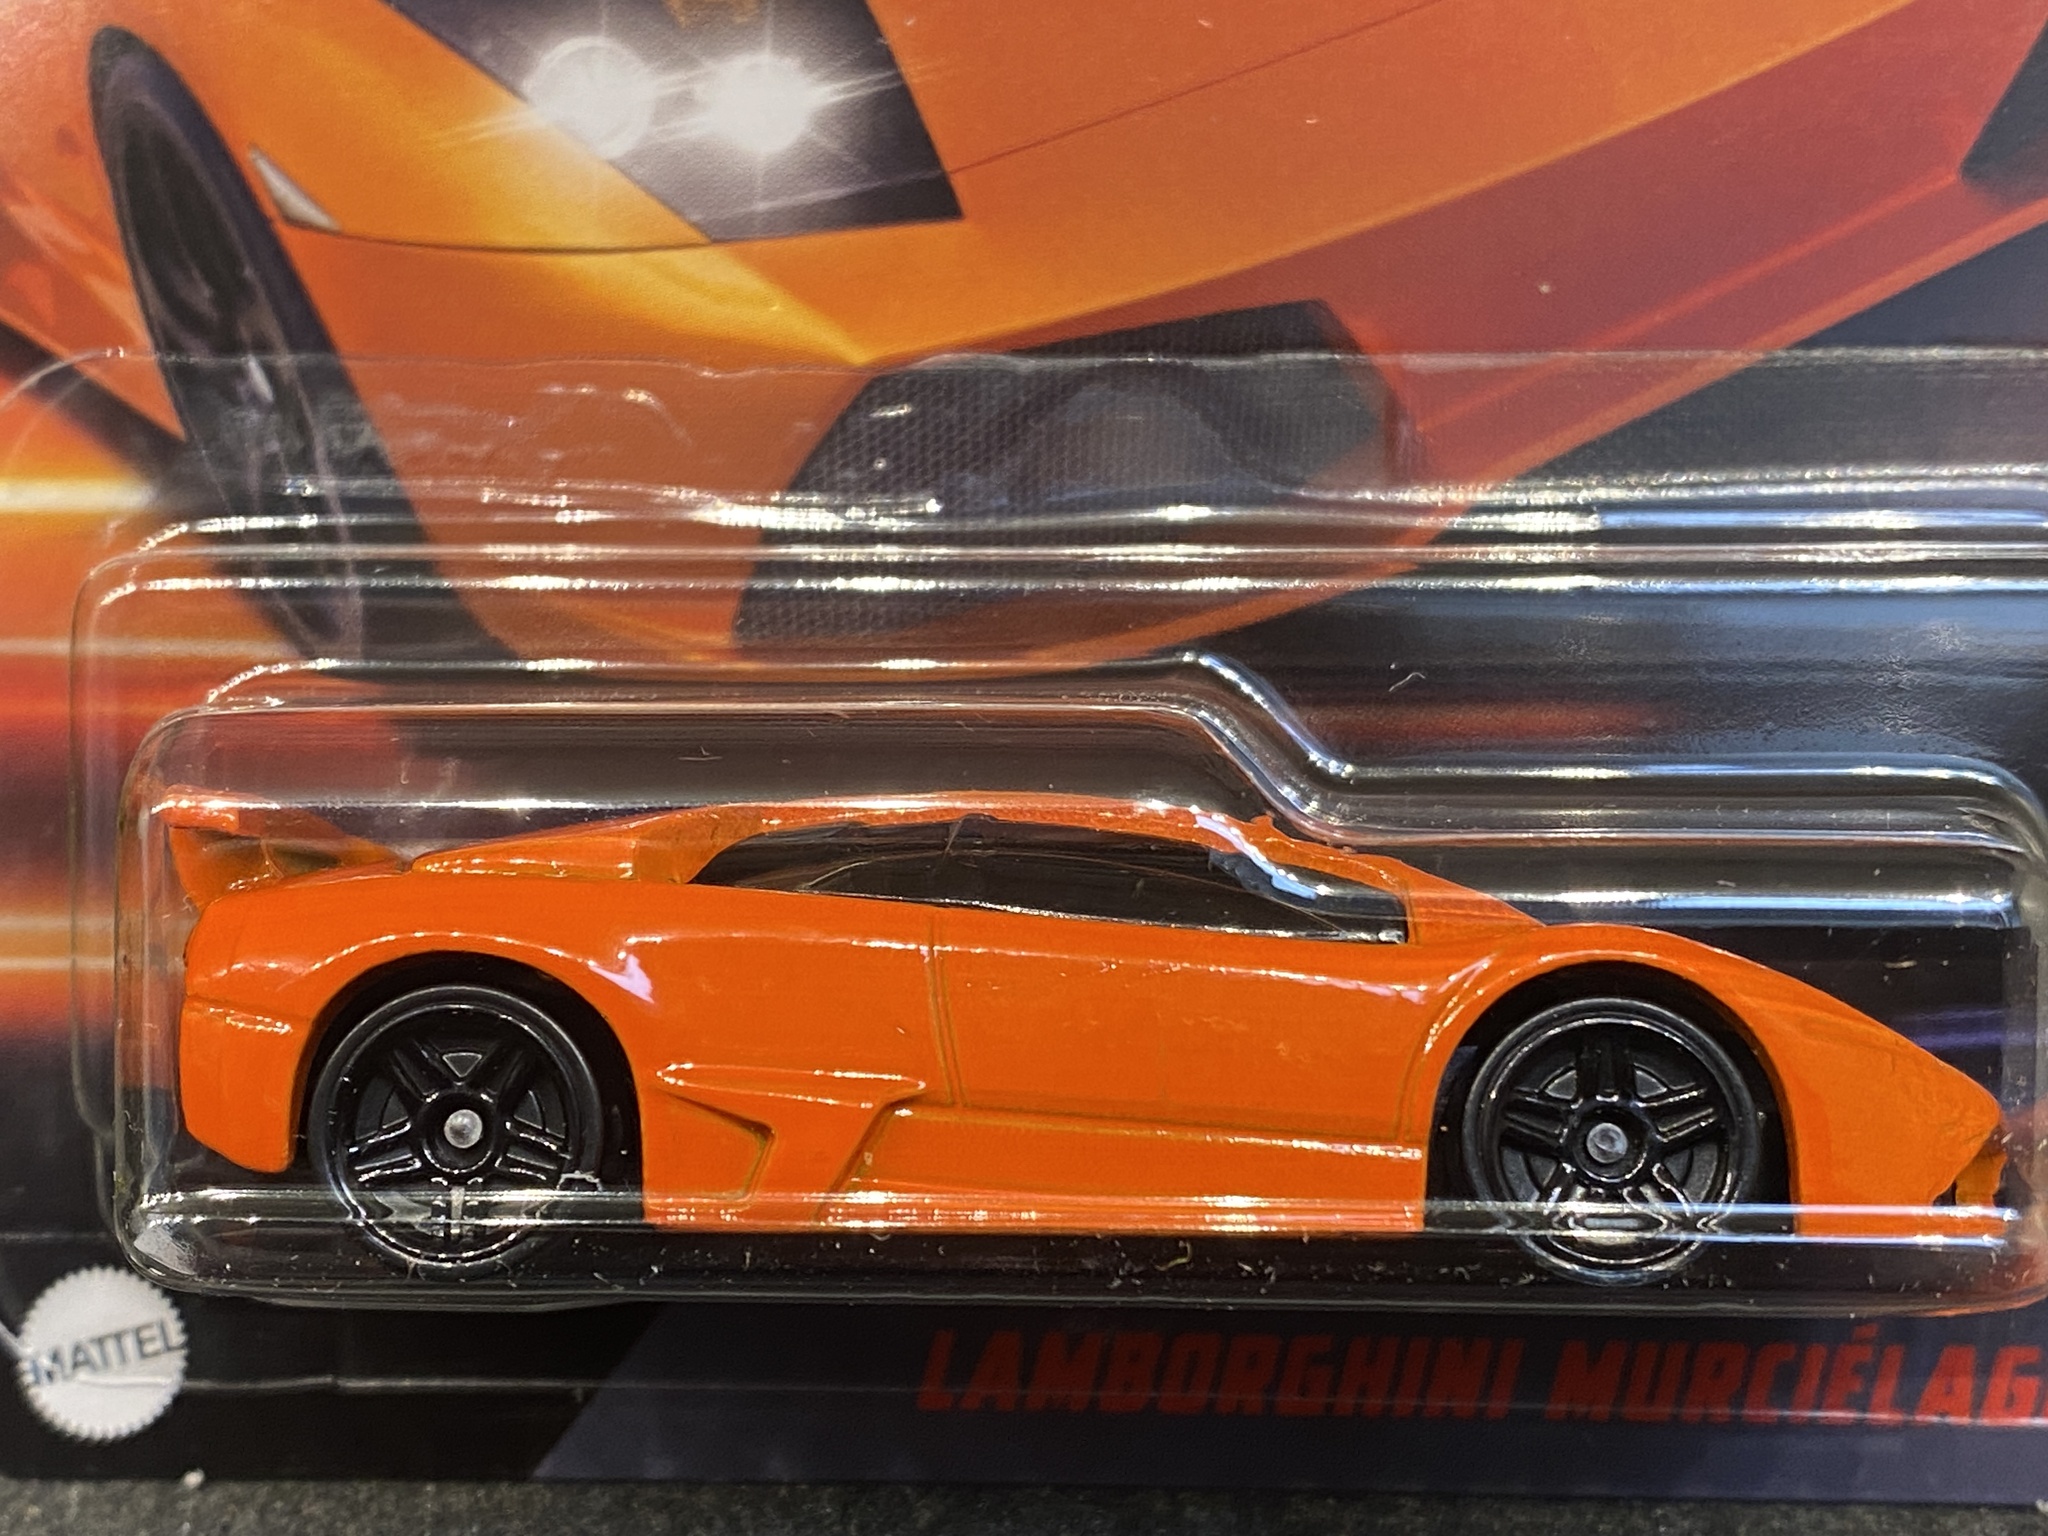 Skala 1/64 Hot Wheels - Fast & Furious: Lamborghini Murciélago, orange